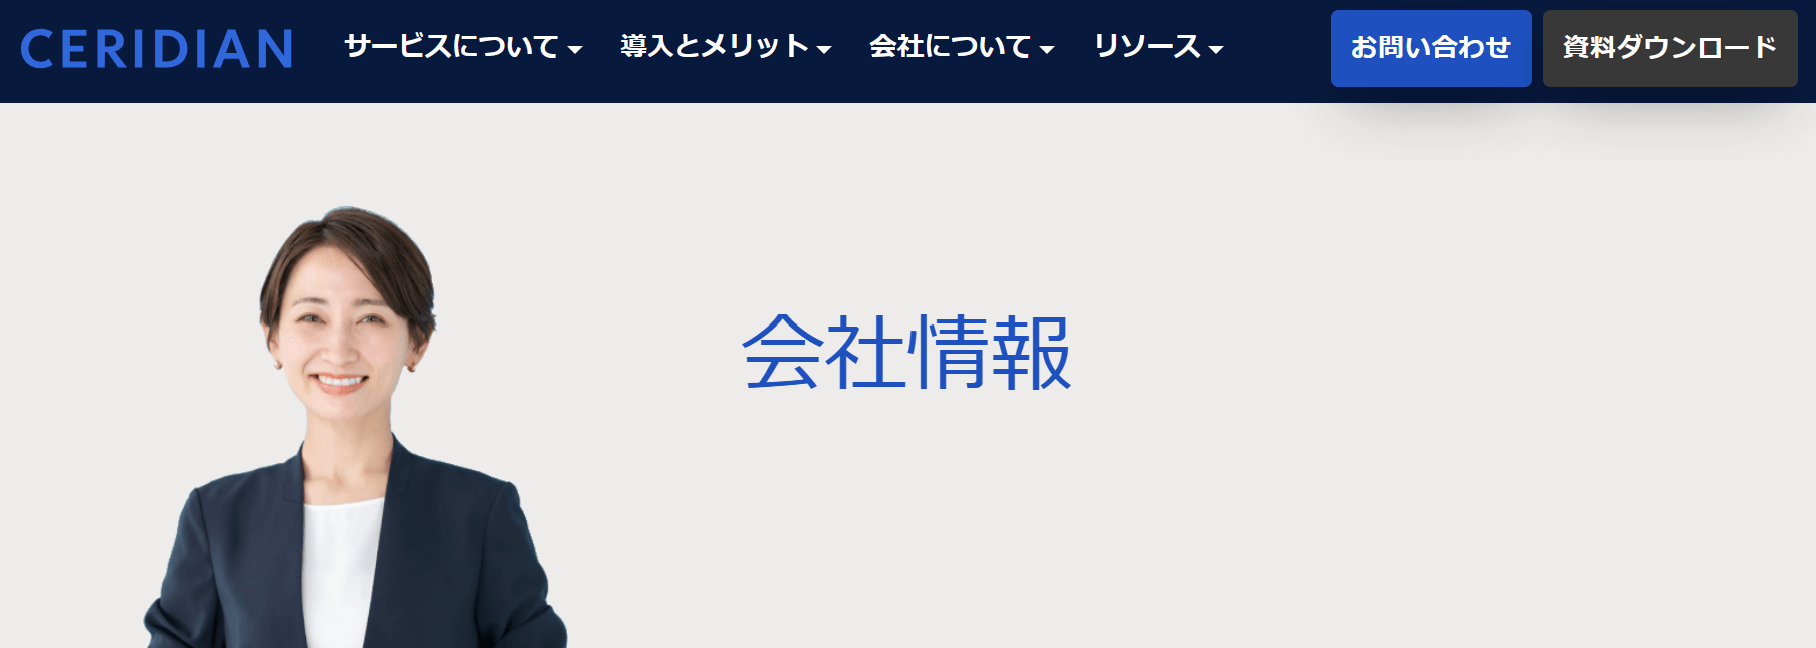 Workcloud_会社情報画面